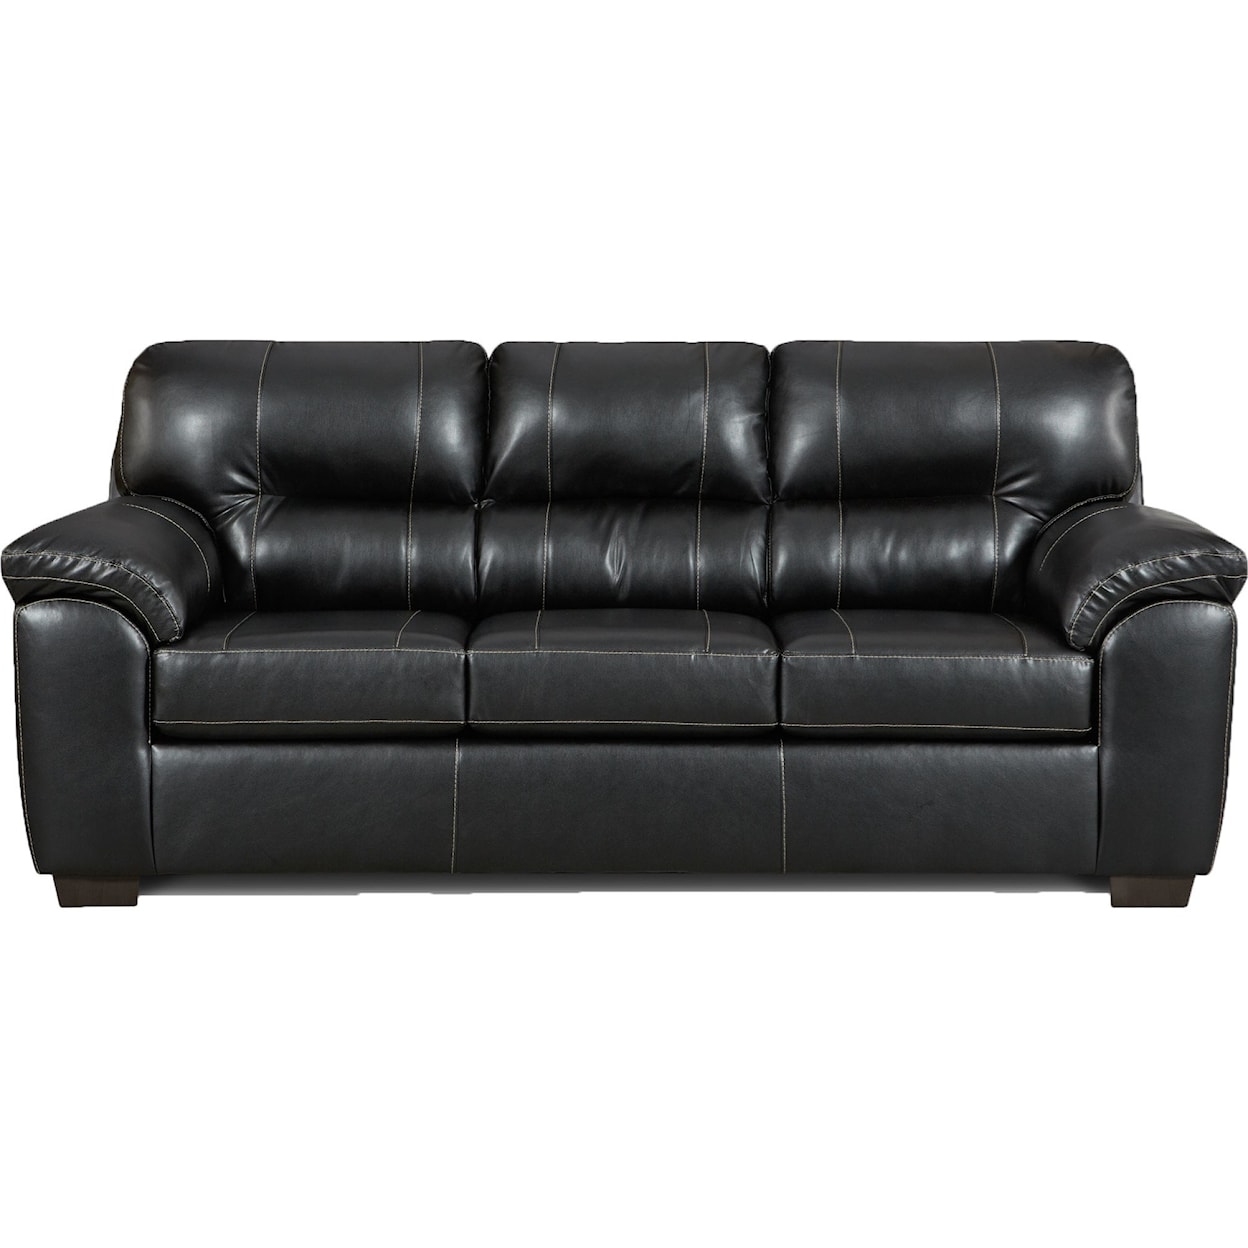 Affordable Furniture Easton EASTON BLACK SOFA |